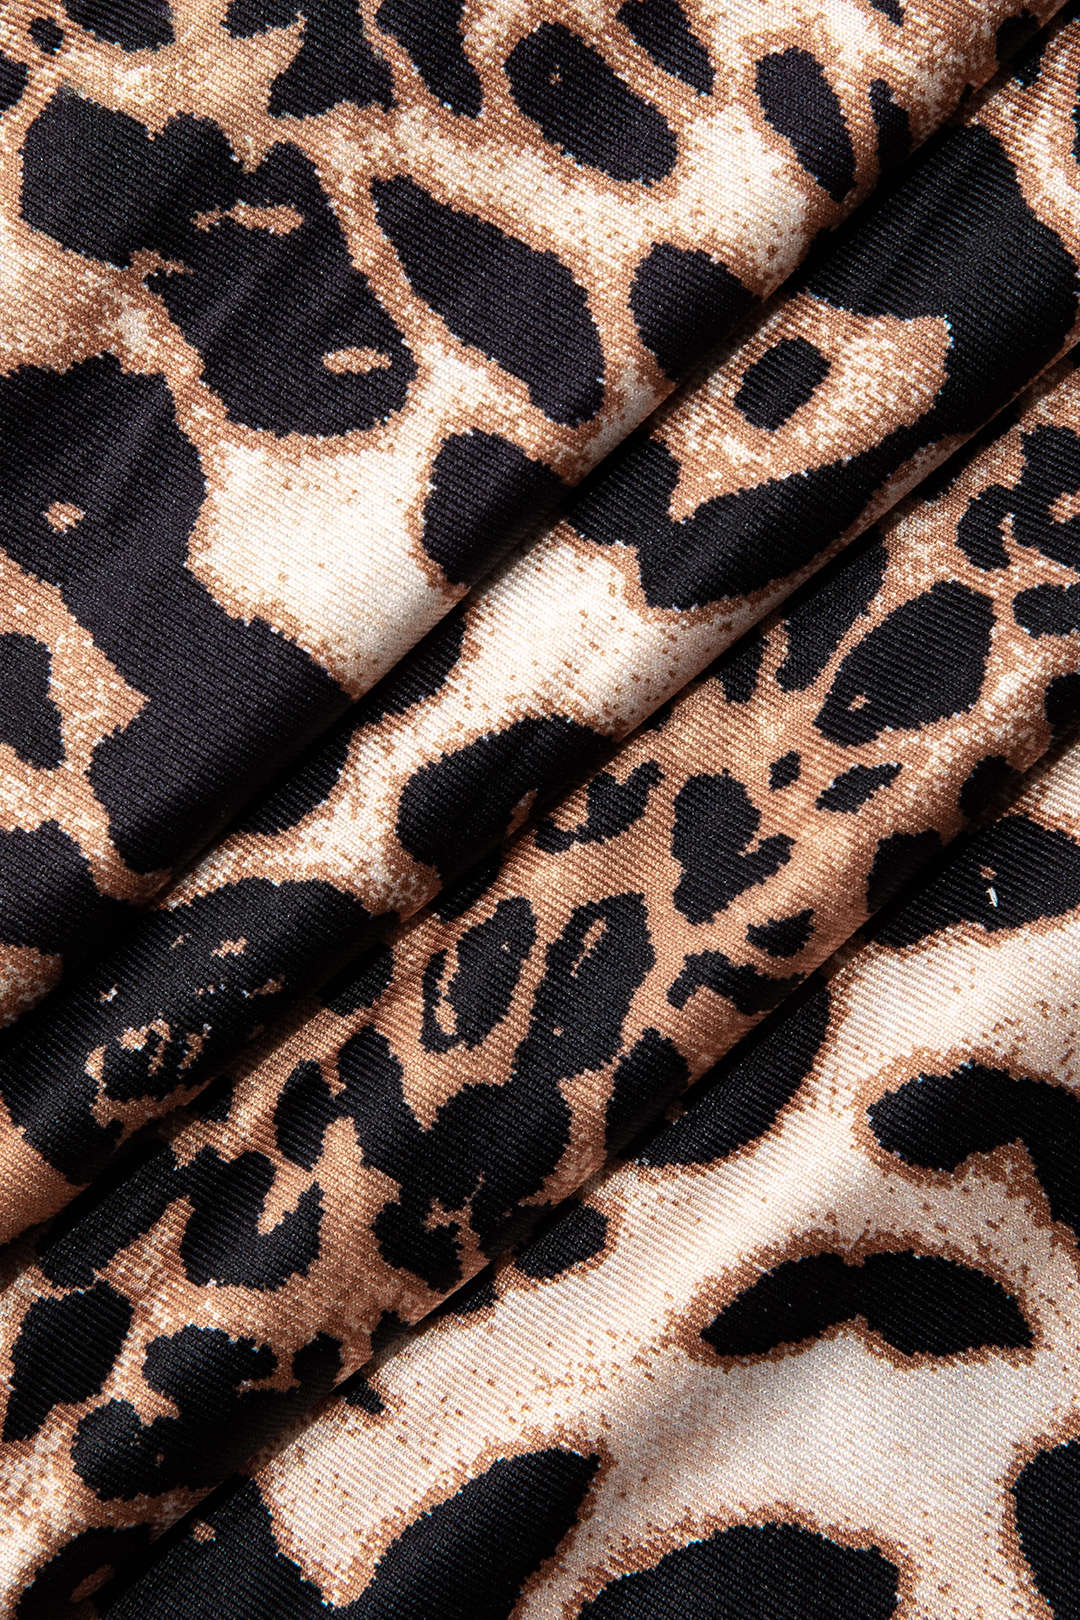 Leopard Print Halter Maxi Dress